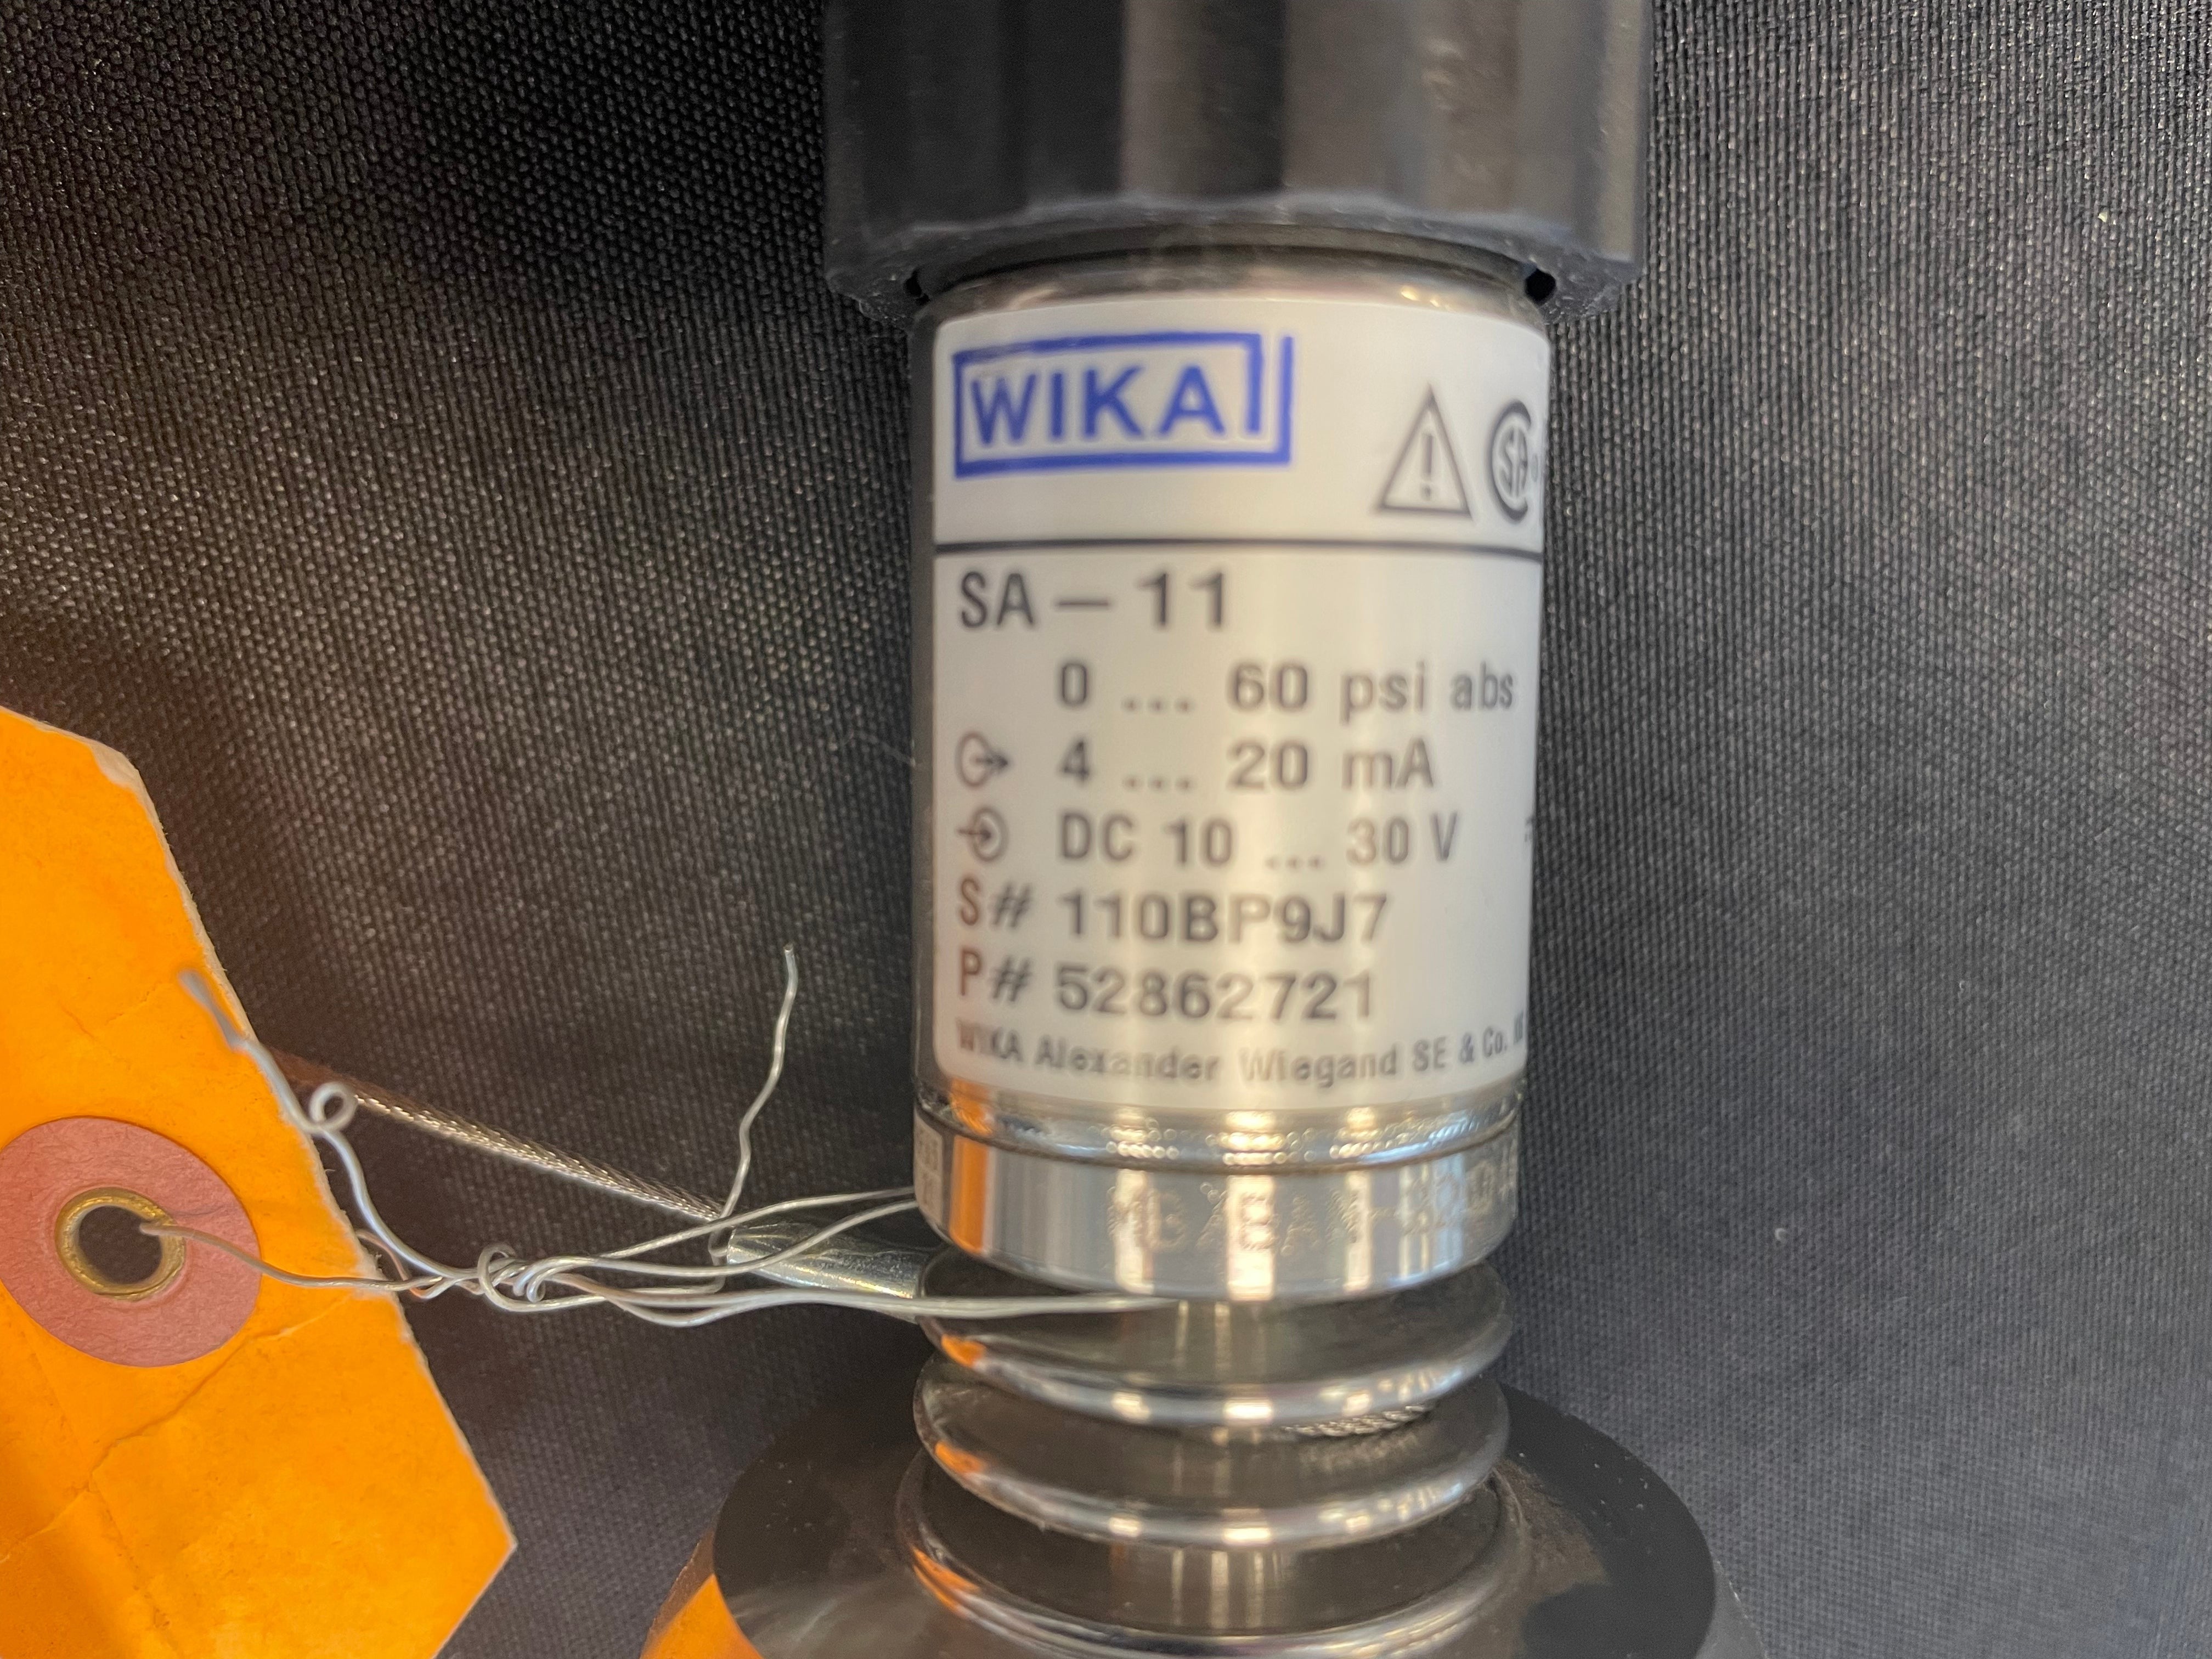 Wika SA-11 Pressure Sensor 0-60 psi